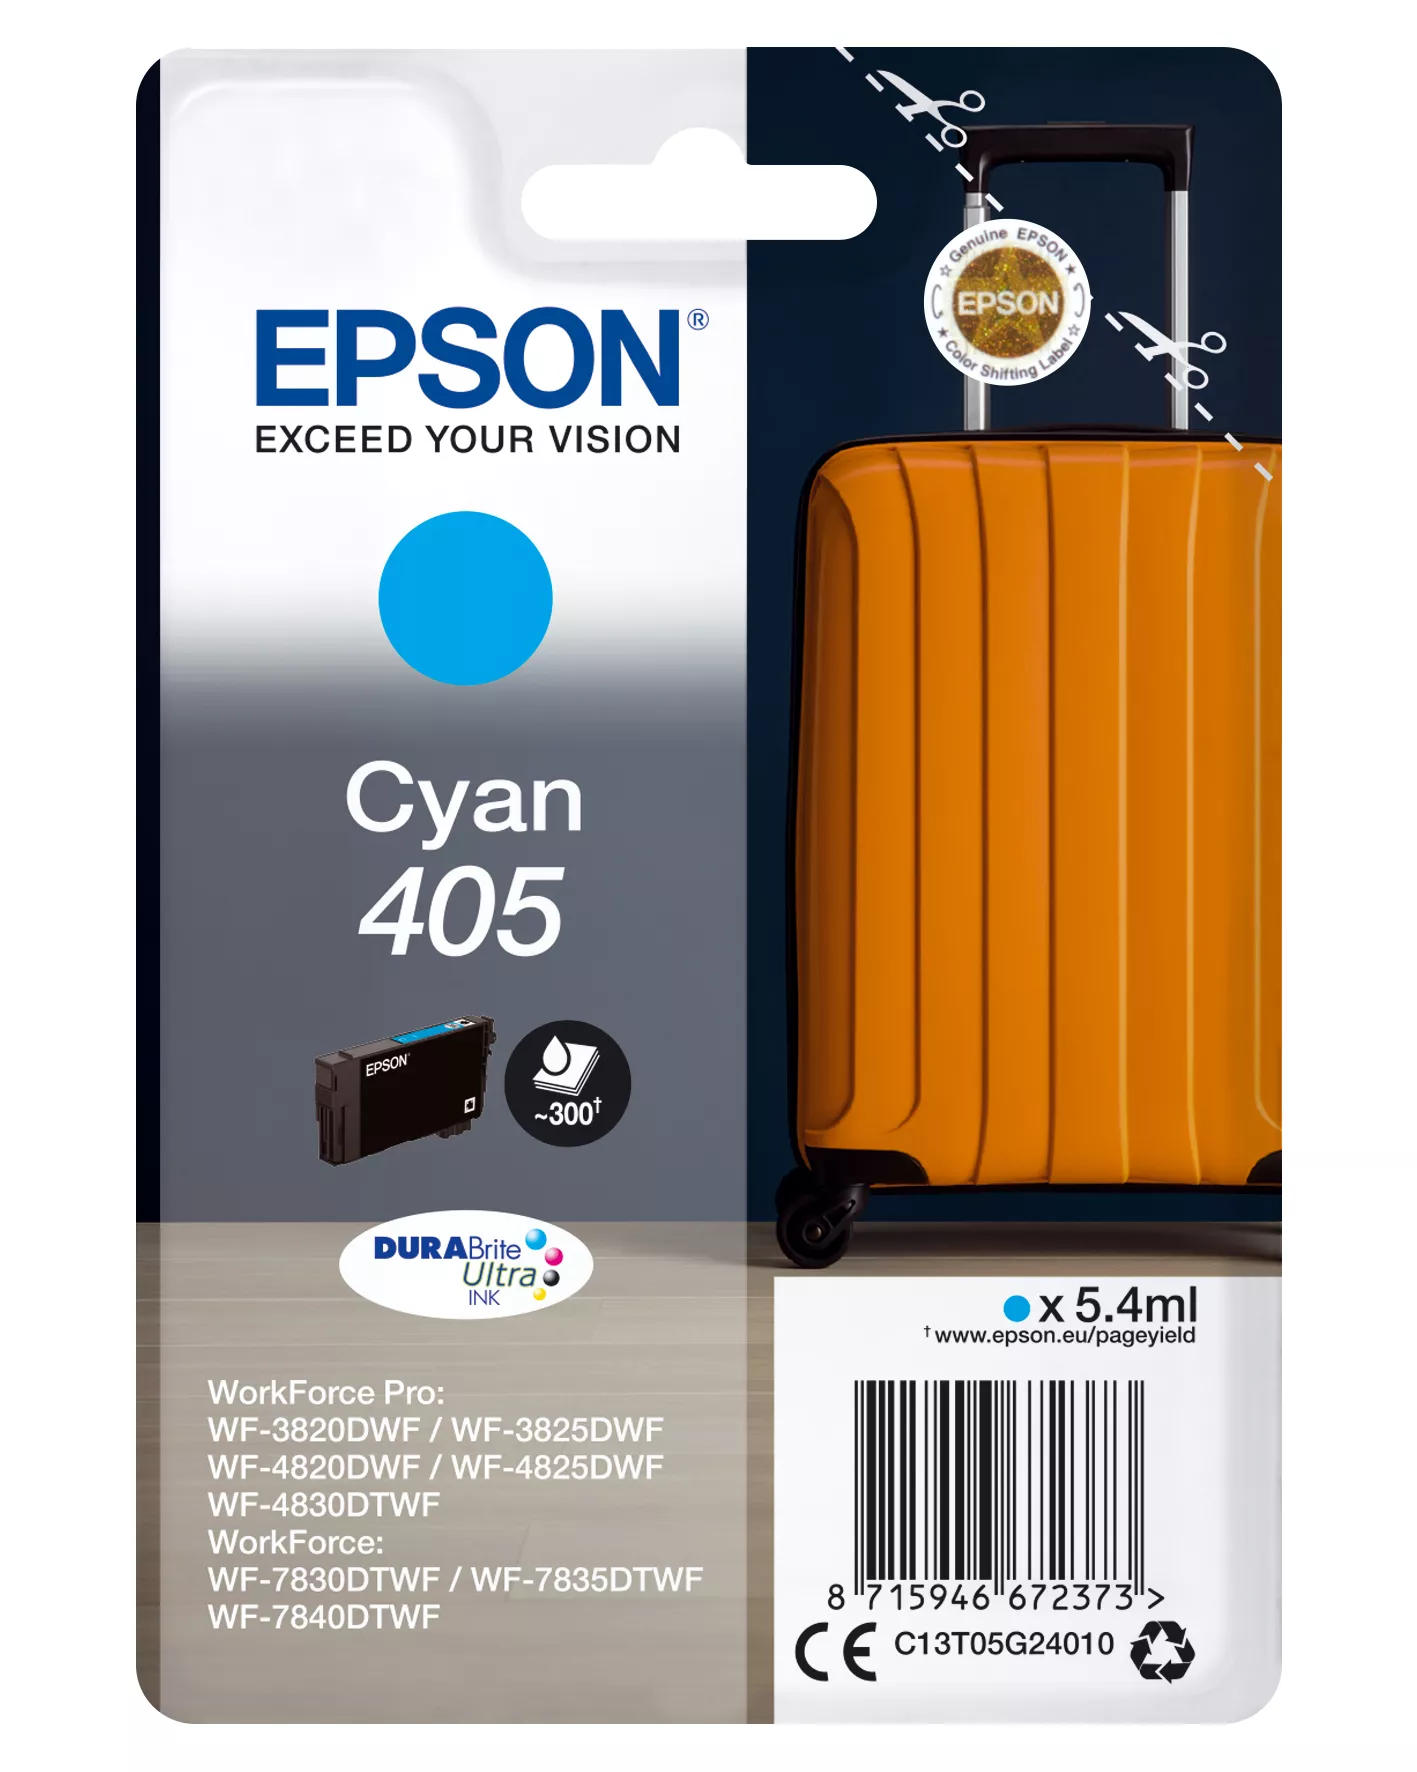 Achat Epson Singlepack Cyan 405 DURABrite Ultra Ink au meilleur prix